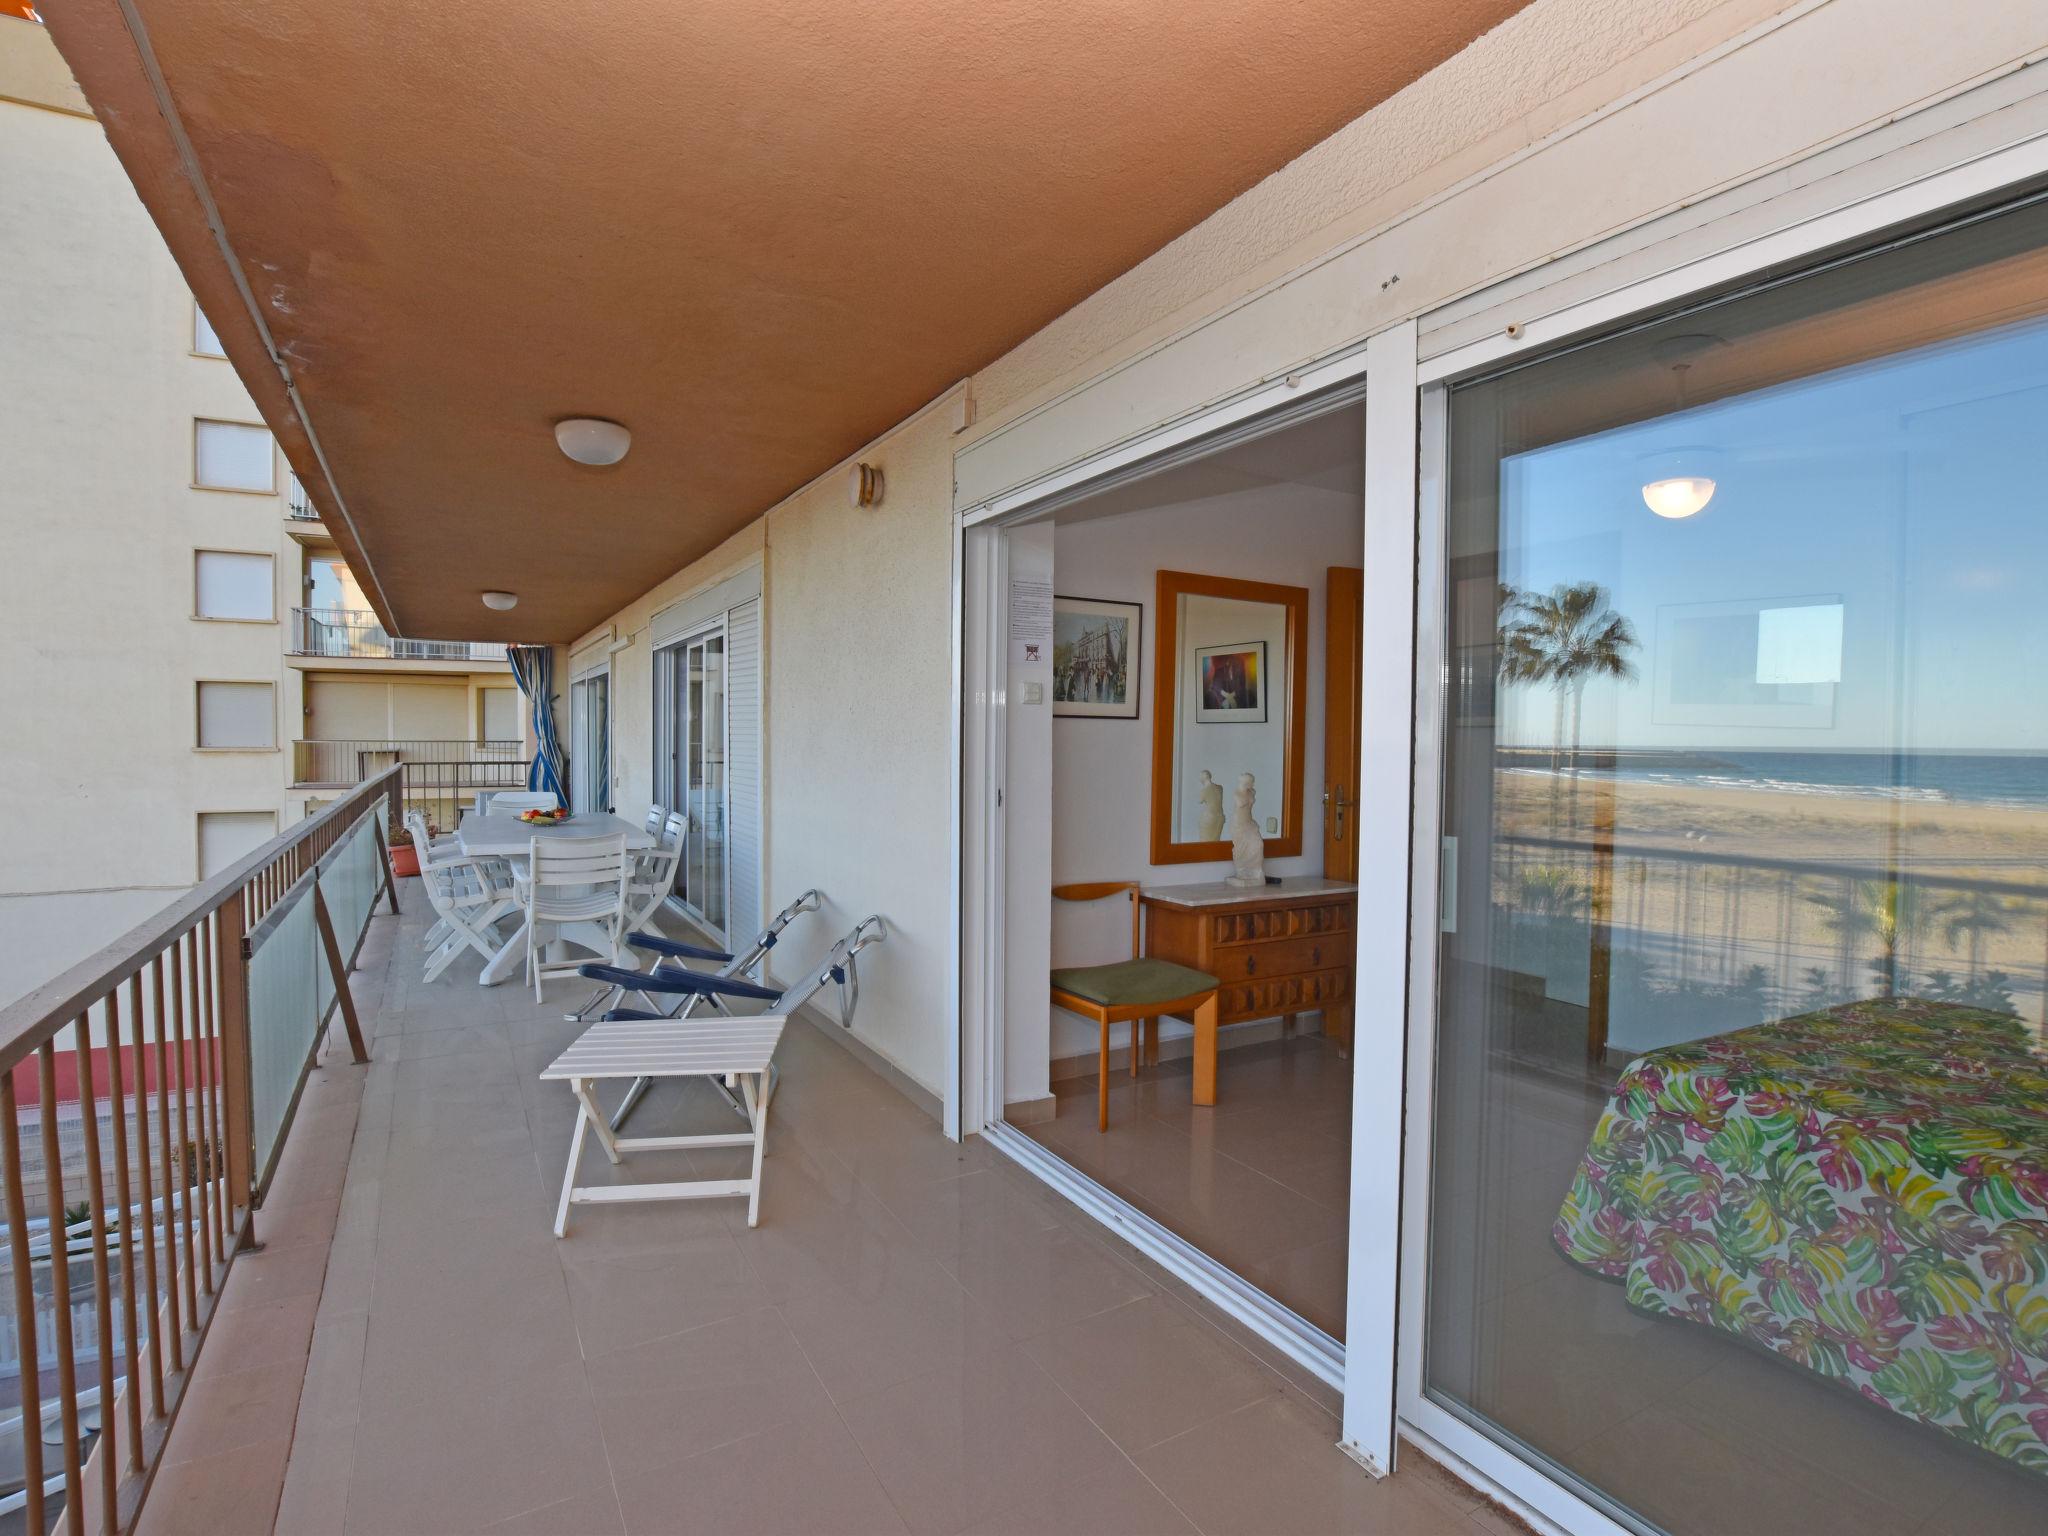 Photo 24 - Appartement de 4 chambres à Torredembarra avec terrasse et vues à la mer